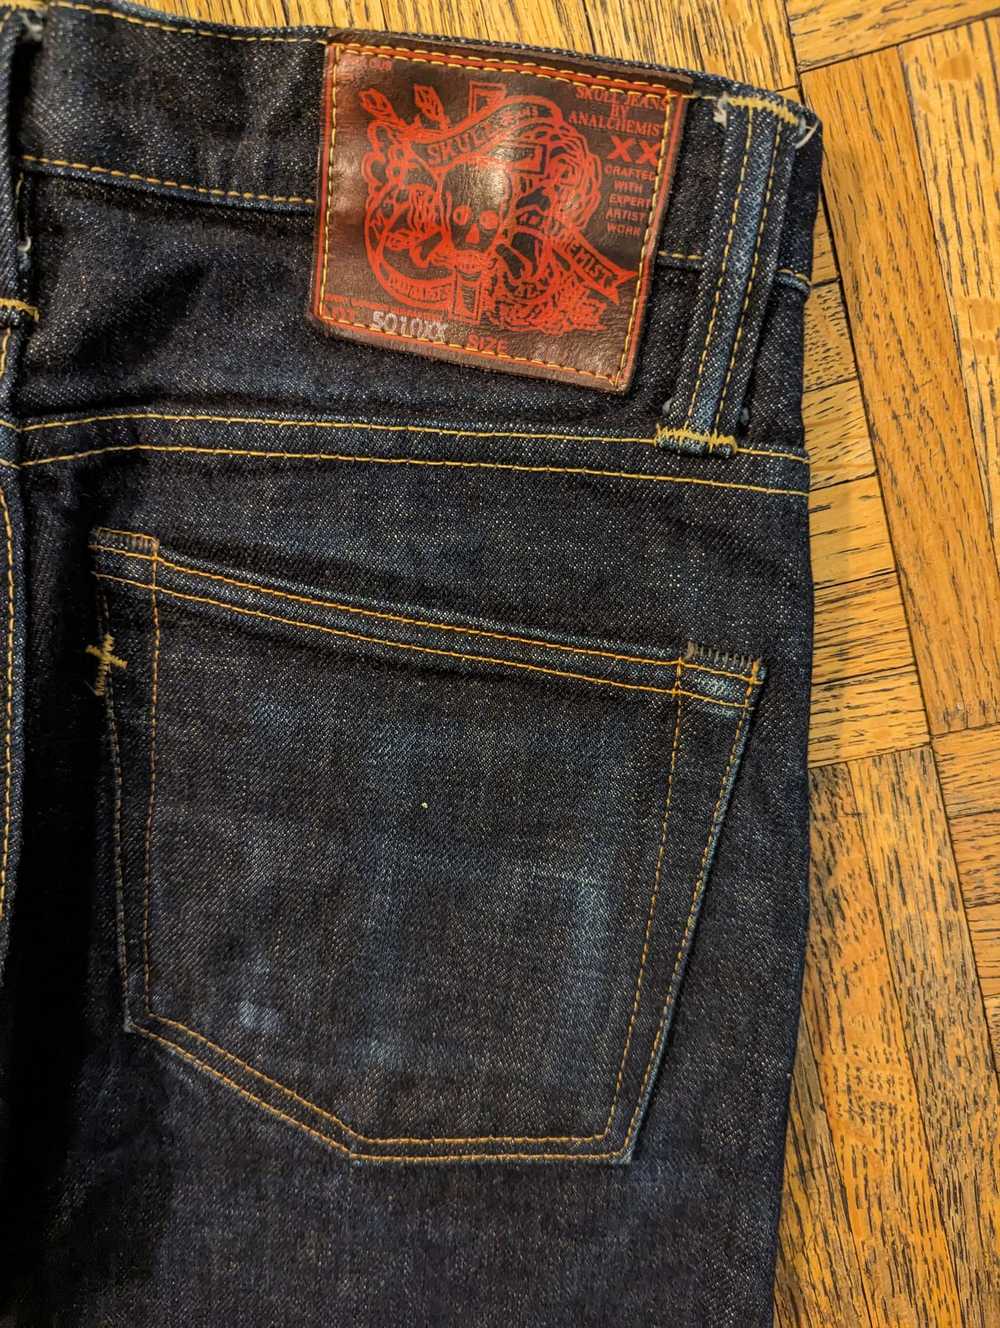 Skull Jeans Selvedge jeans, made in Japan - image 11